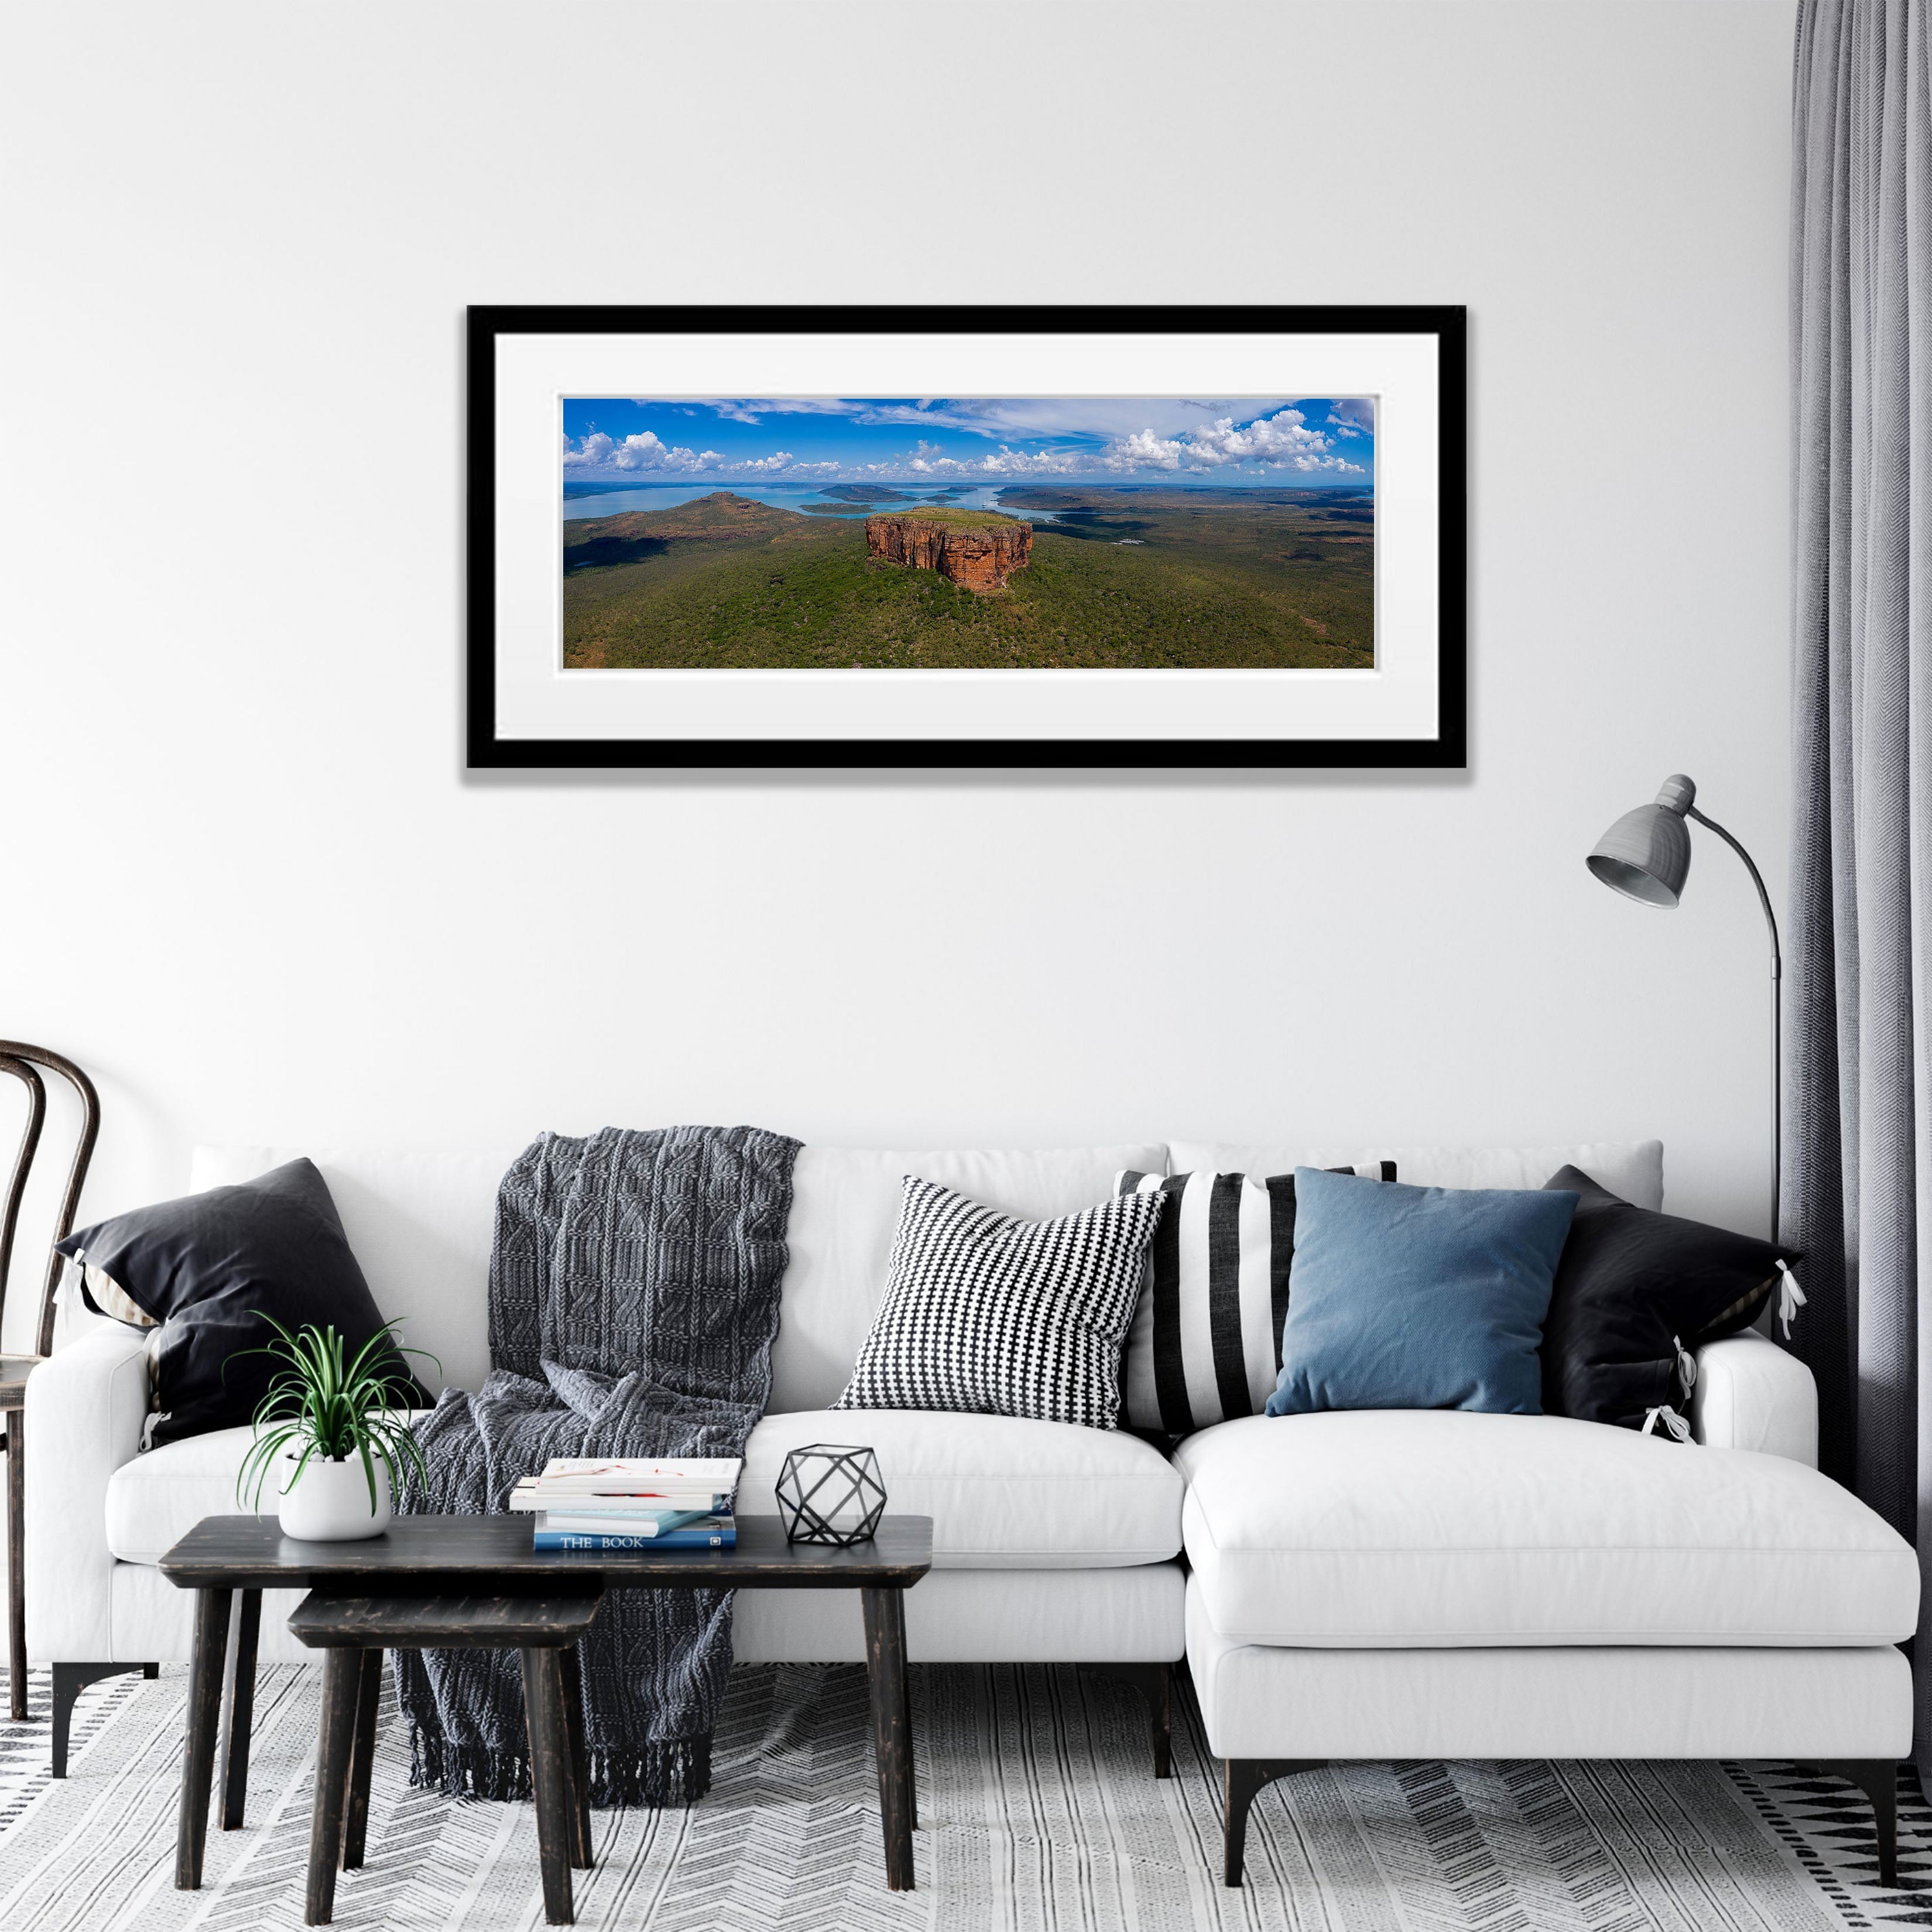 Mount Trafalgar Panorama, The Kimberley, Western Australia